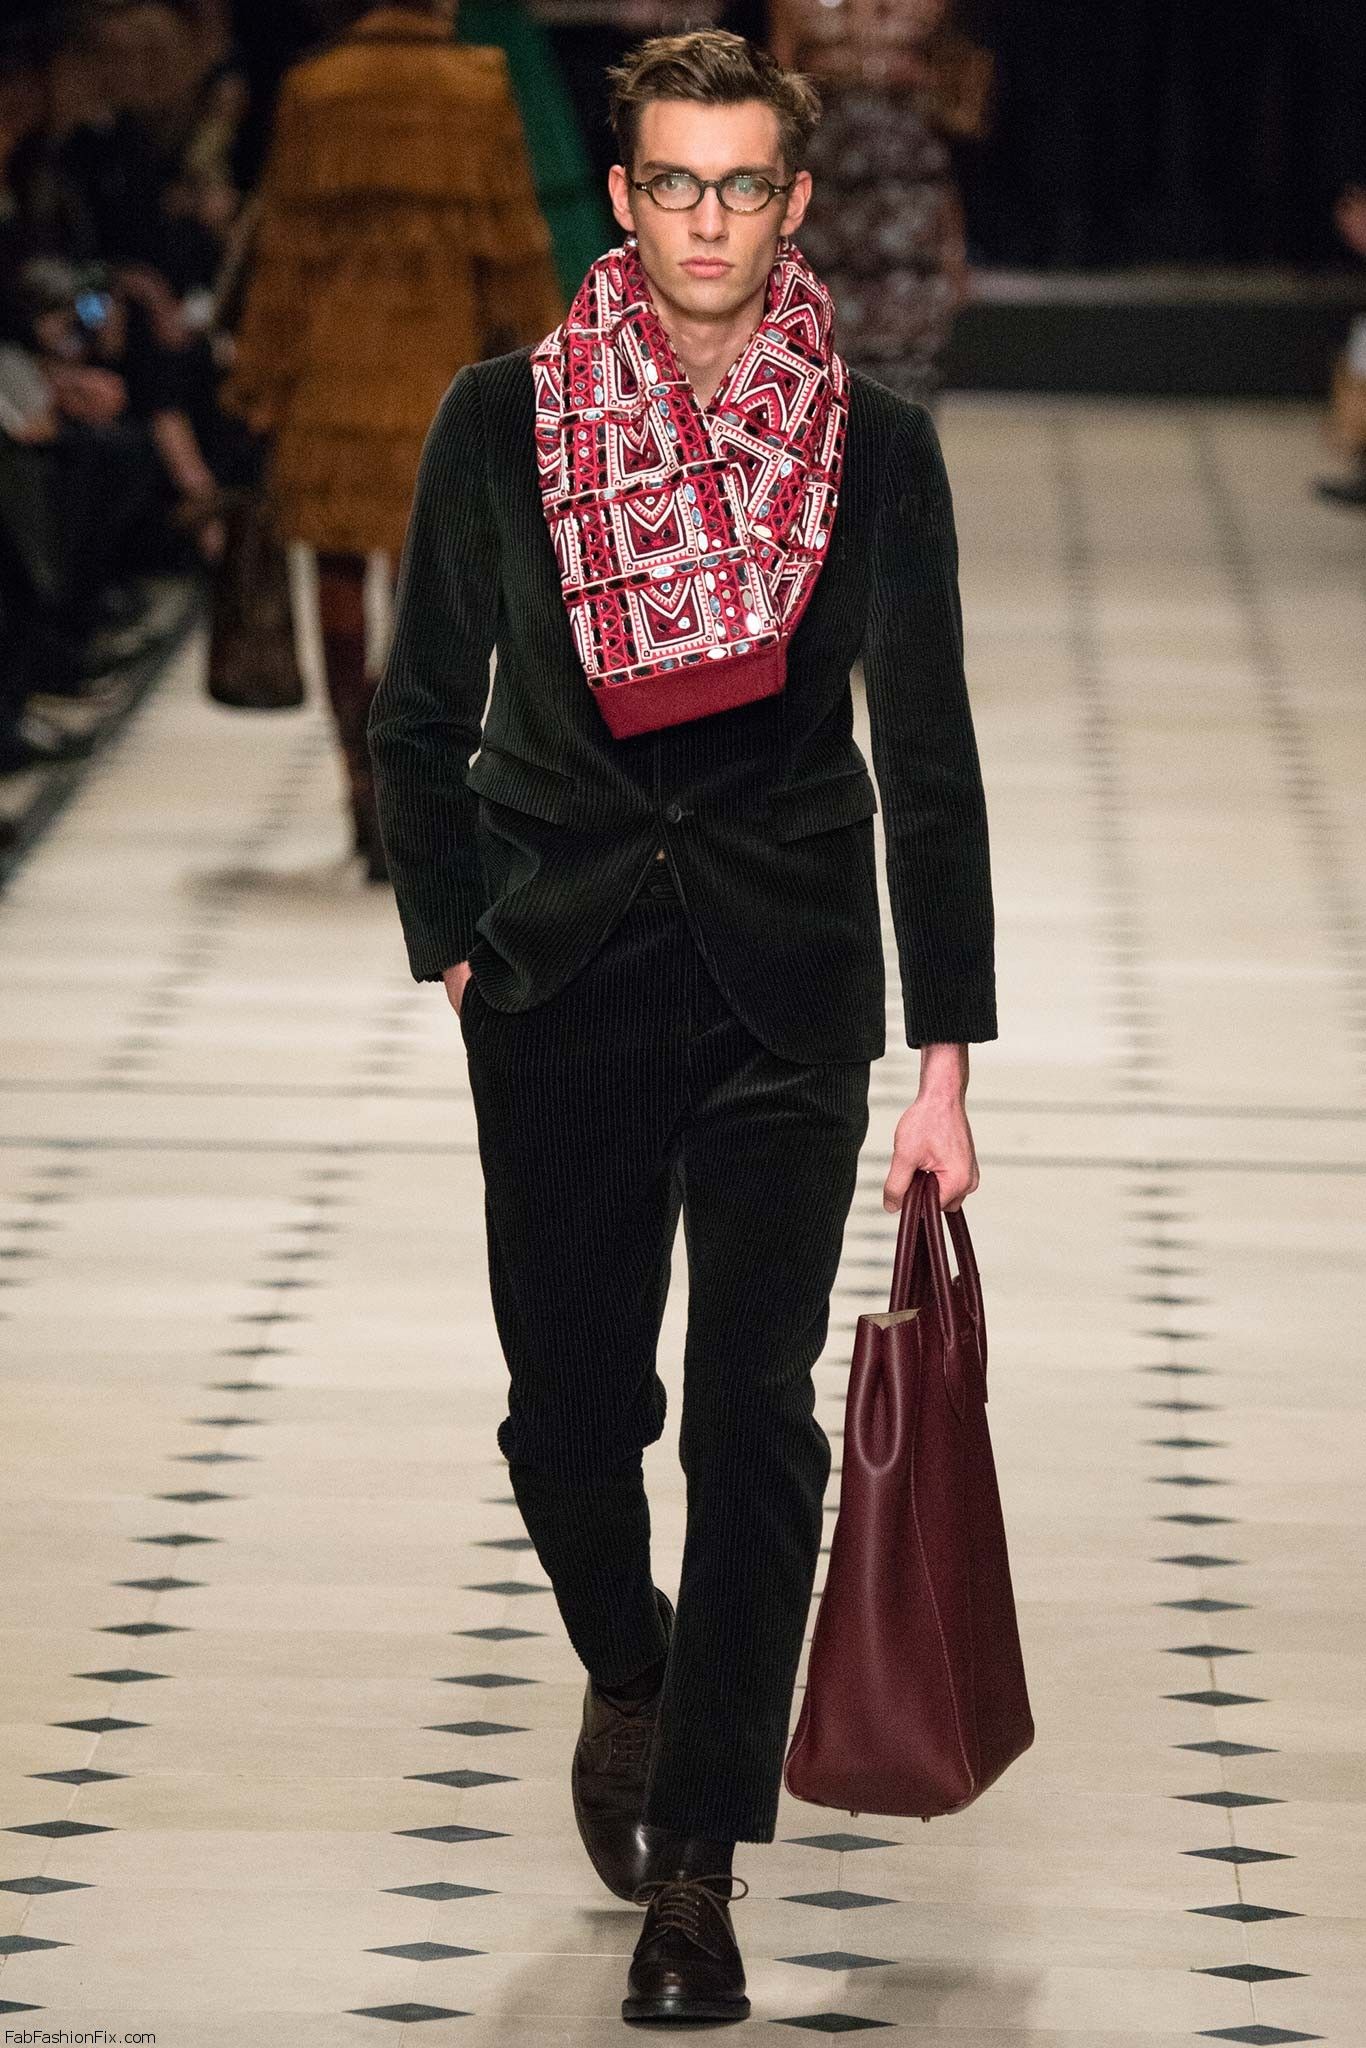 Burberry Prorsum fall/winter 2015 collection – London fashion week ...